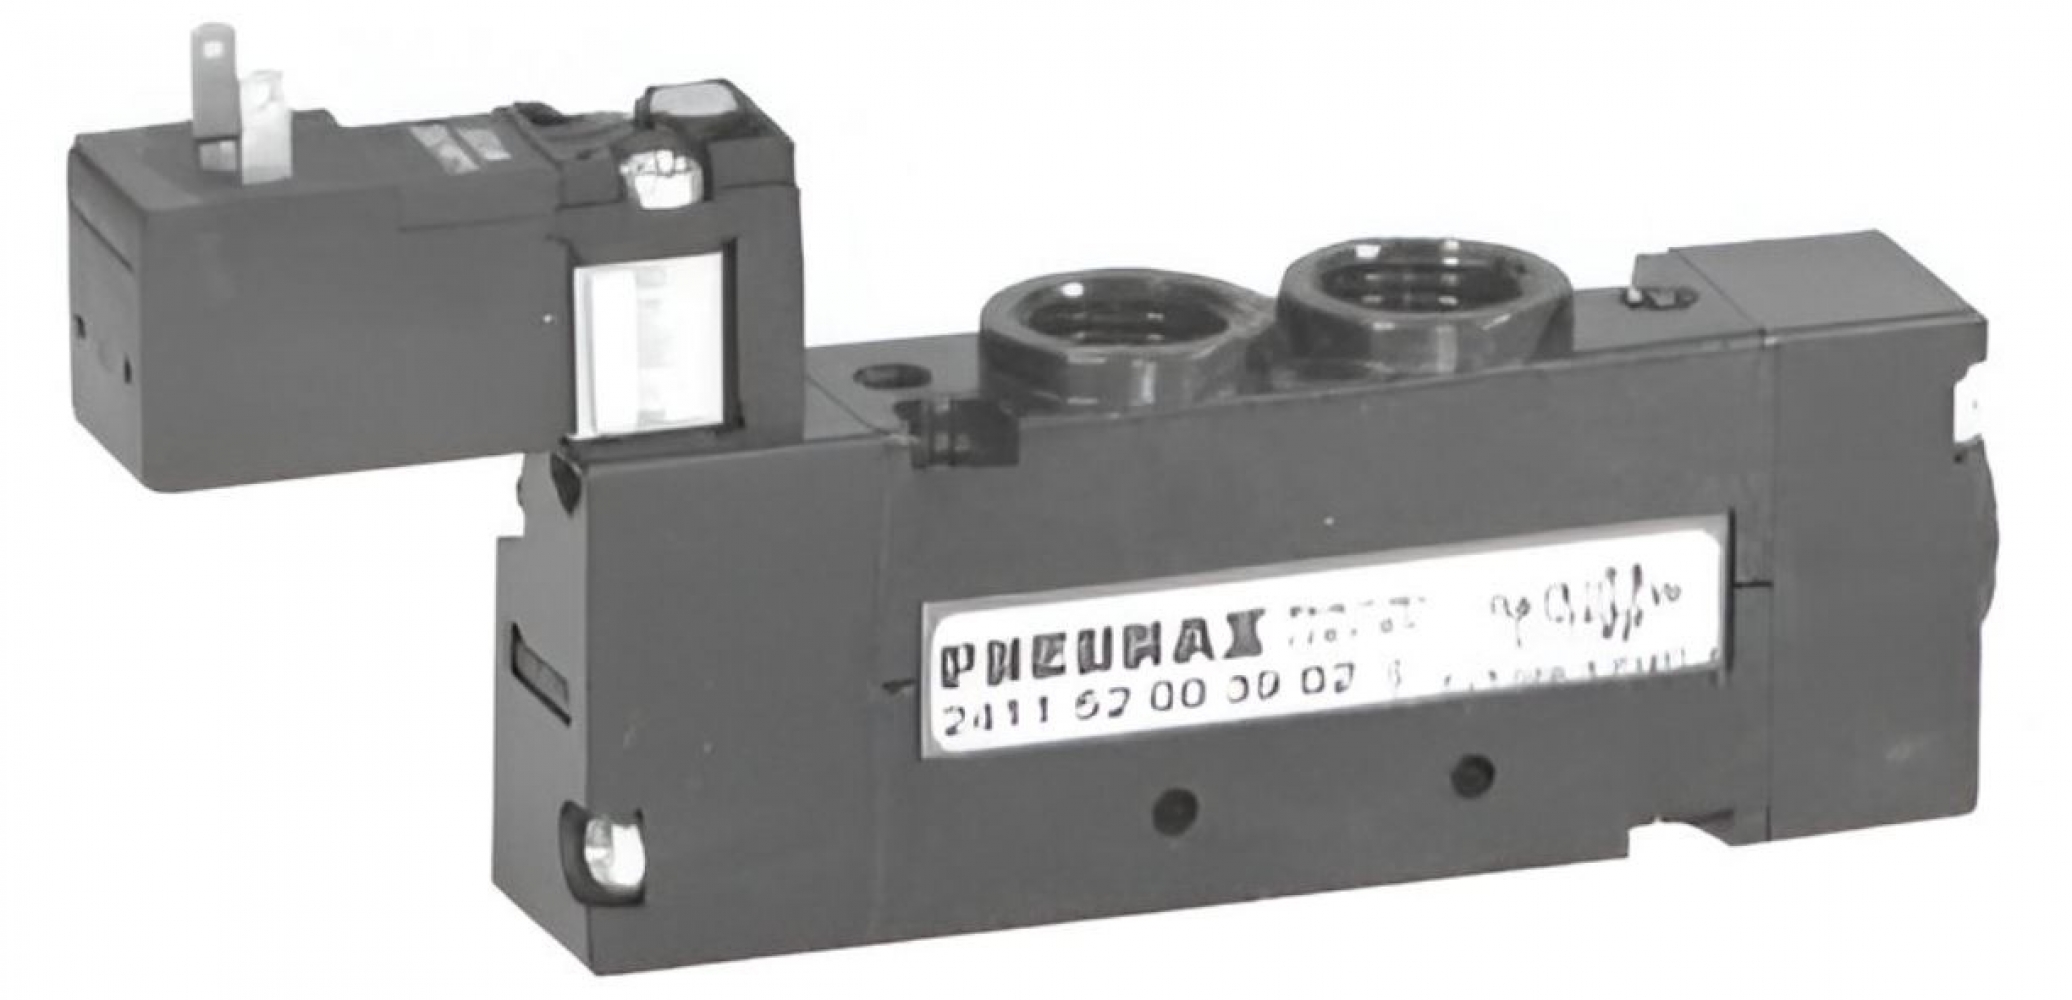 Series 2400 electric valve